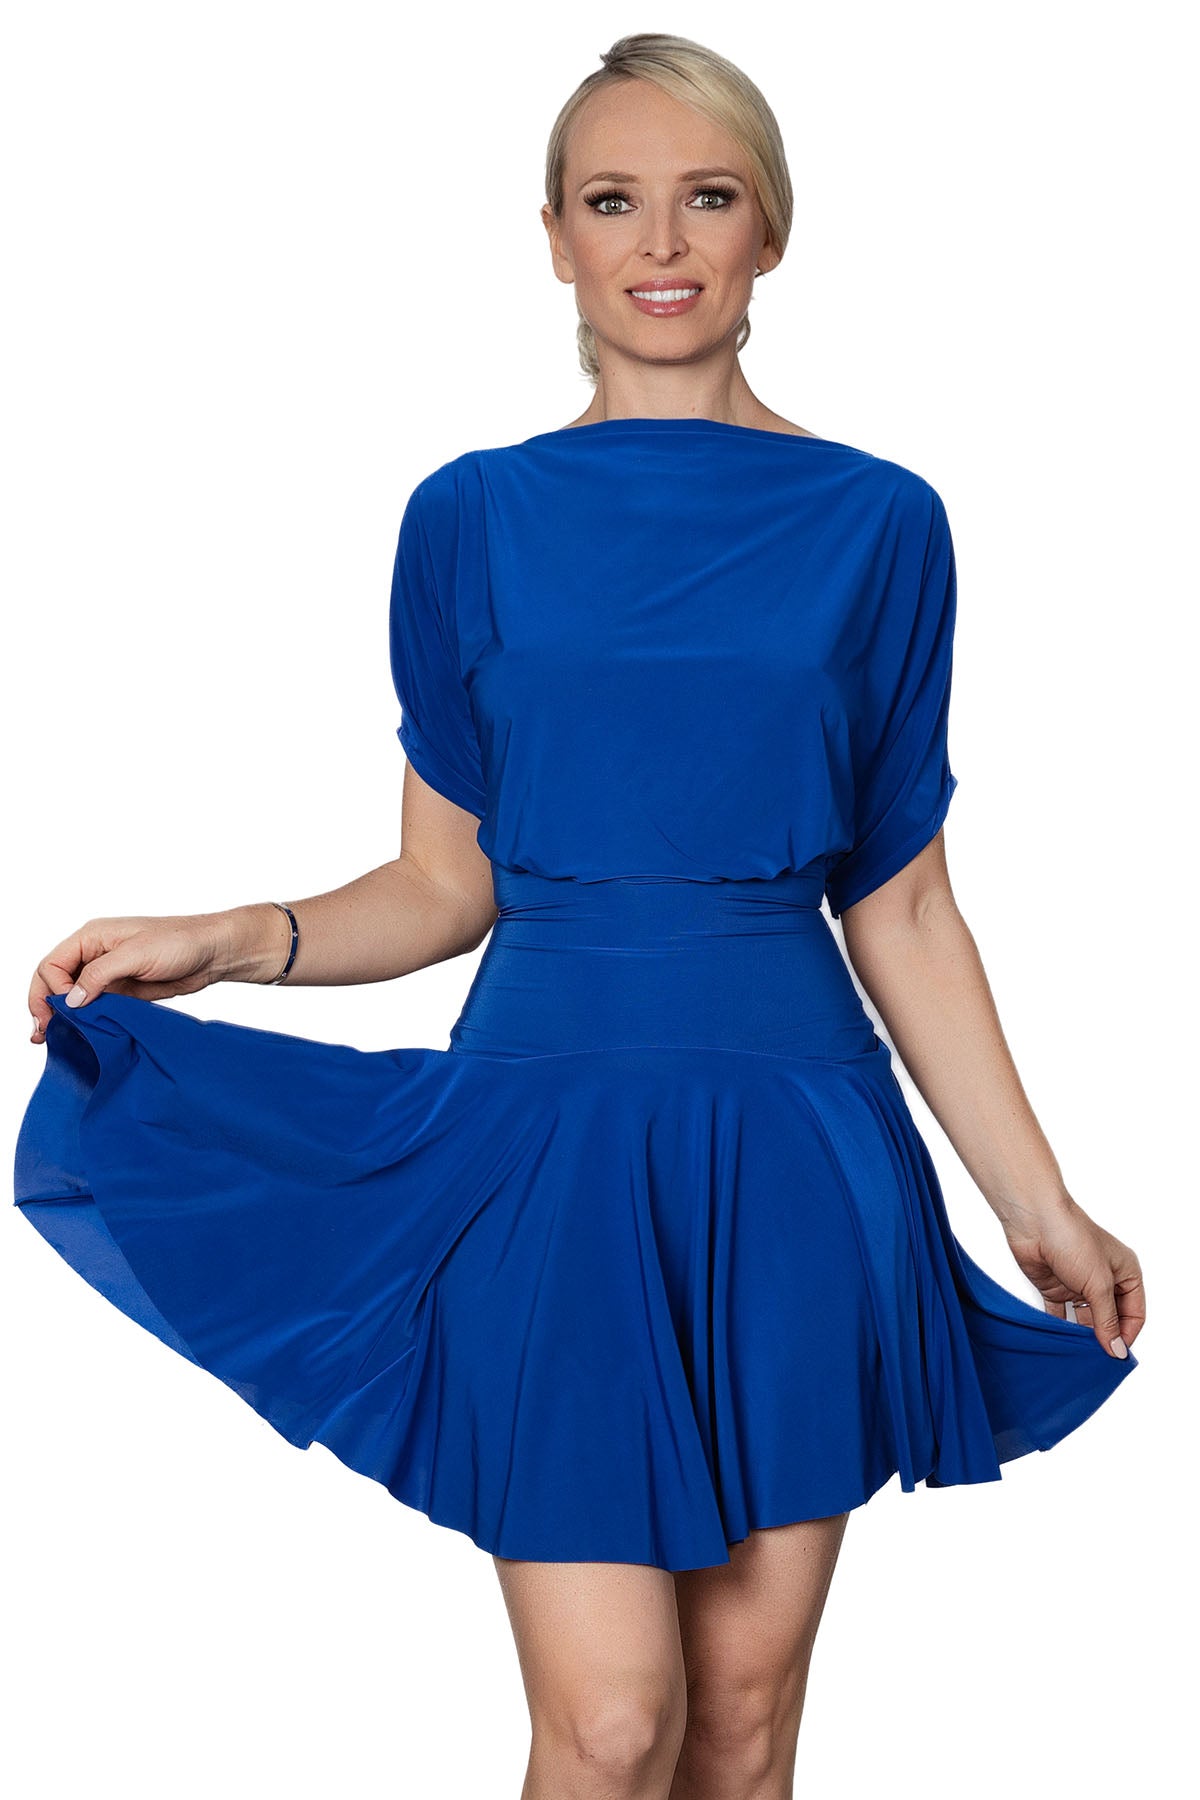 Women's blue Latin dress with back slit